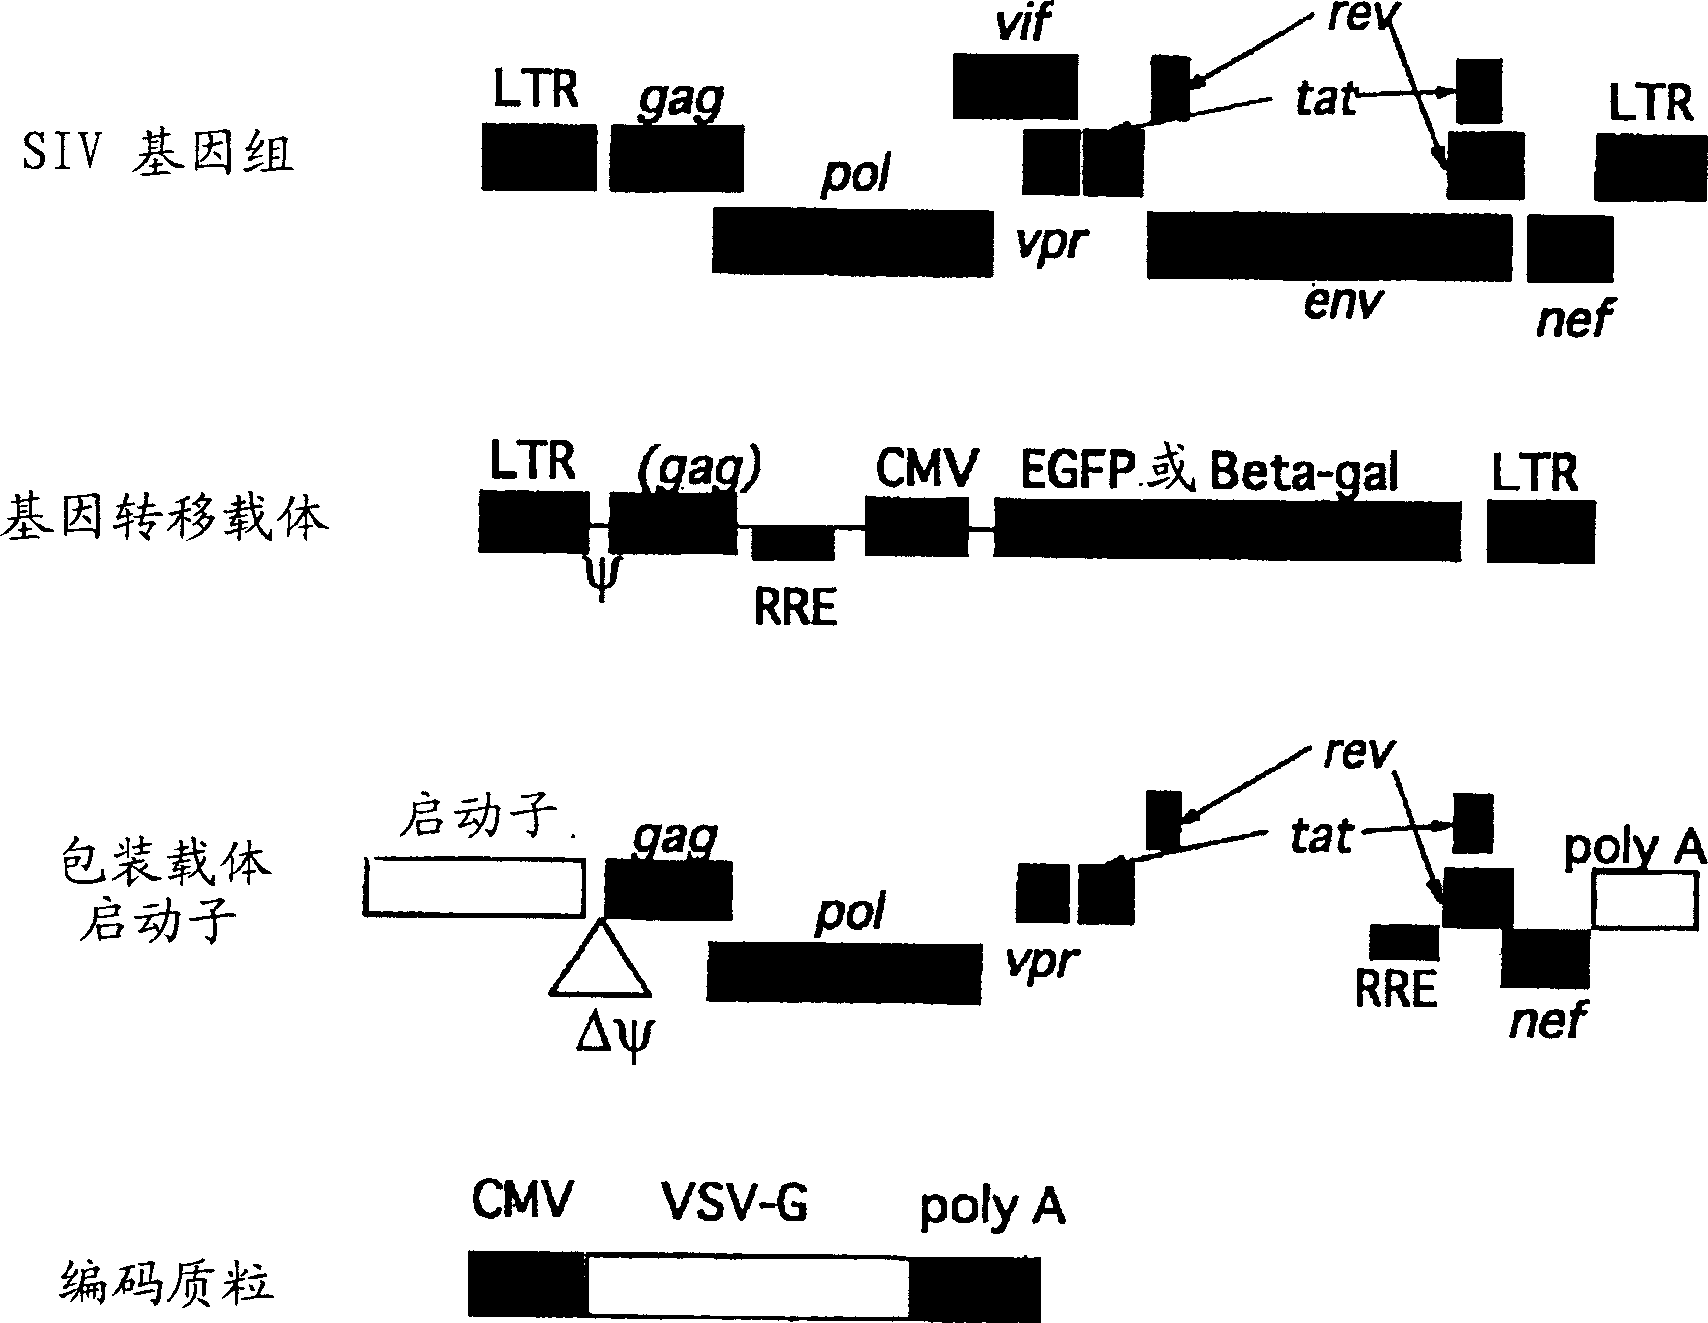 Gene transfer into primate embryonic stem cells using VSV-G pseudo type simian immunodeficiency virus vectors